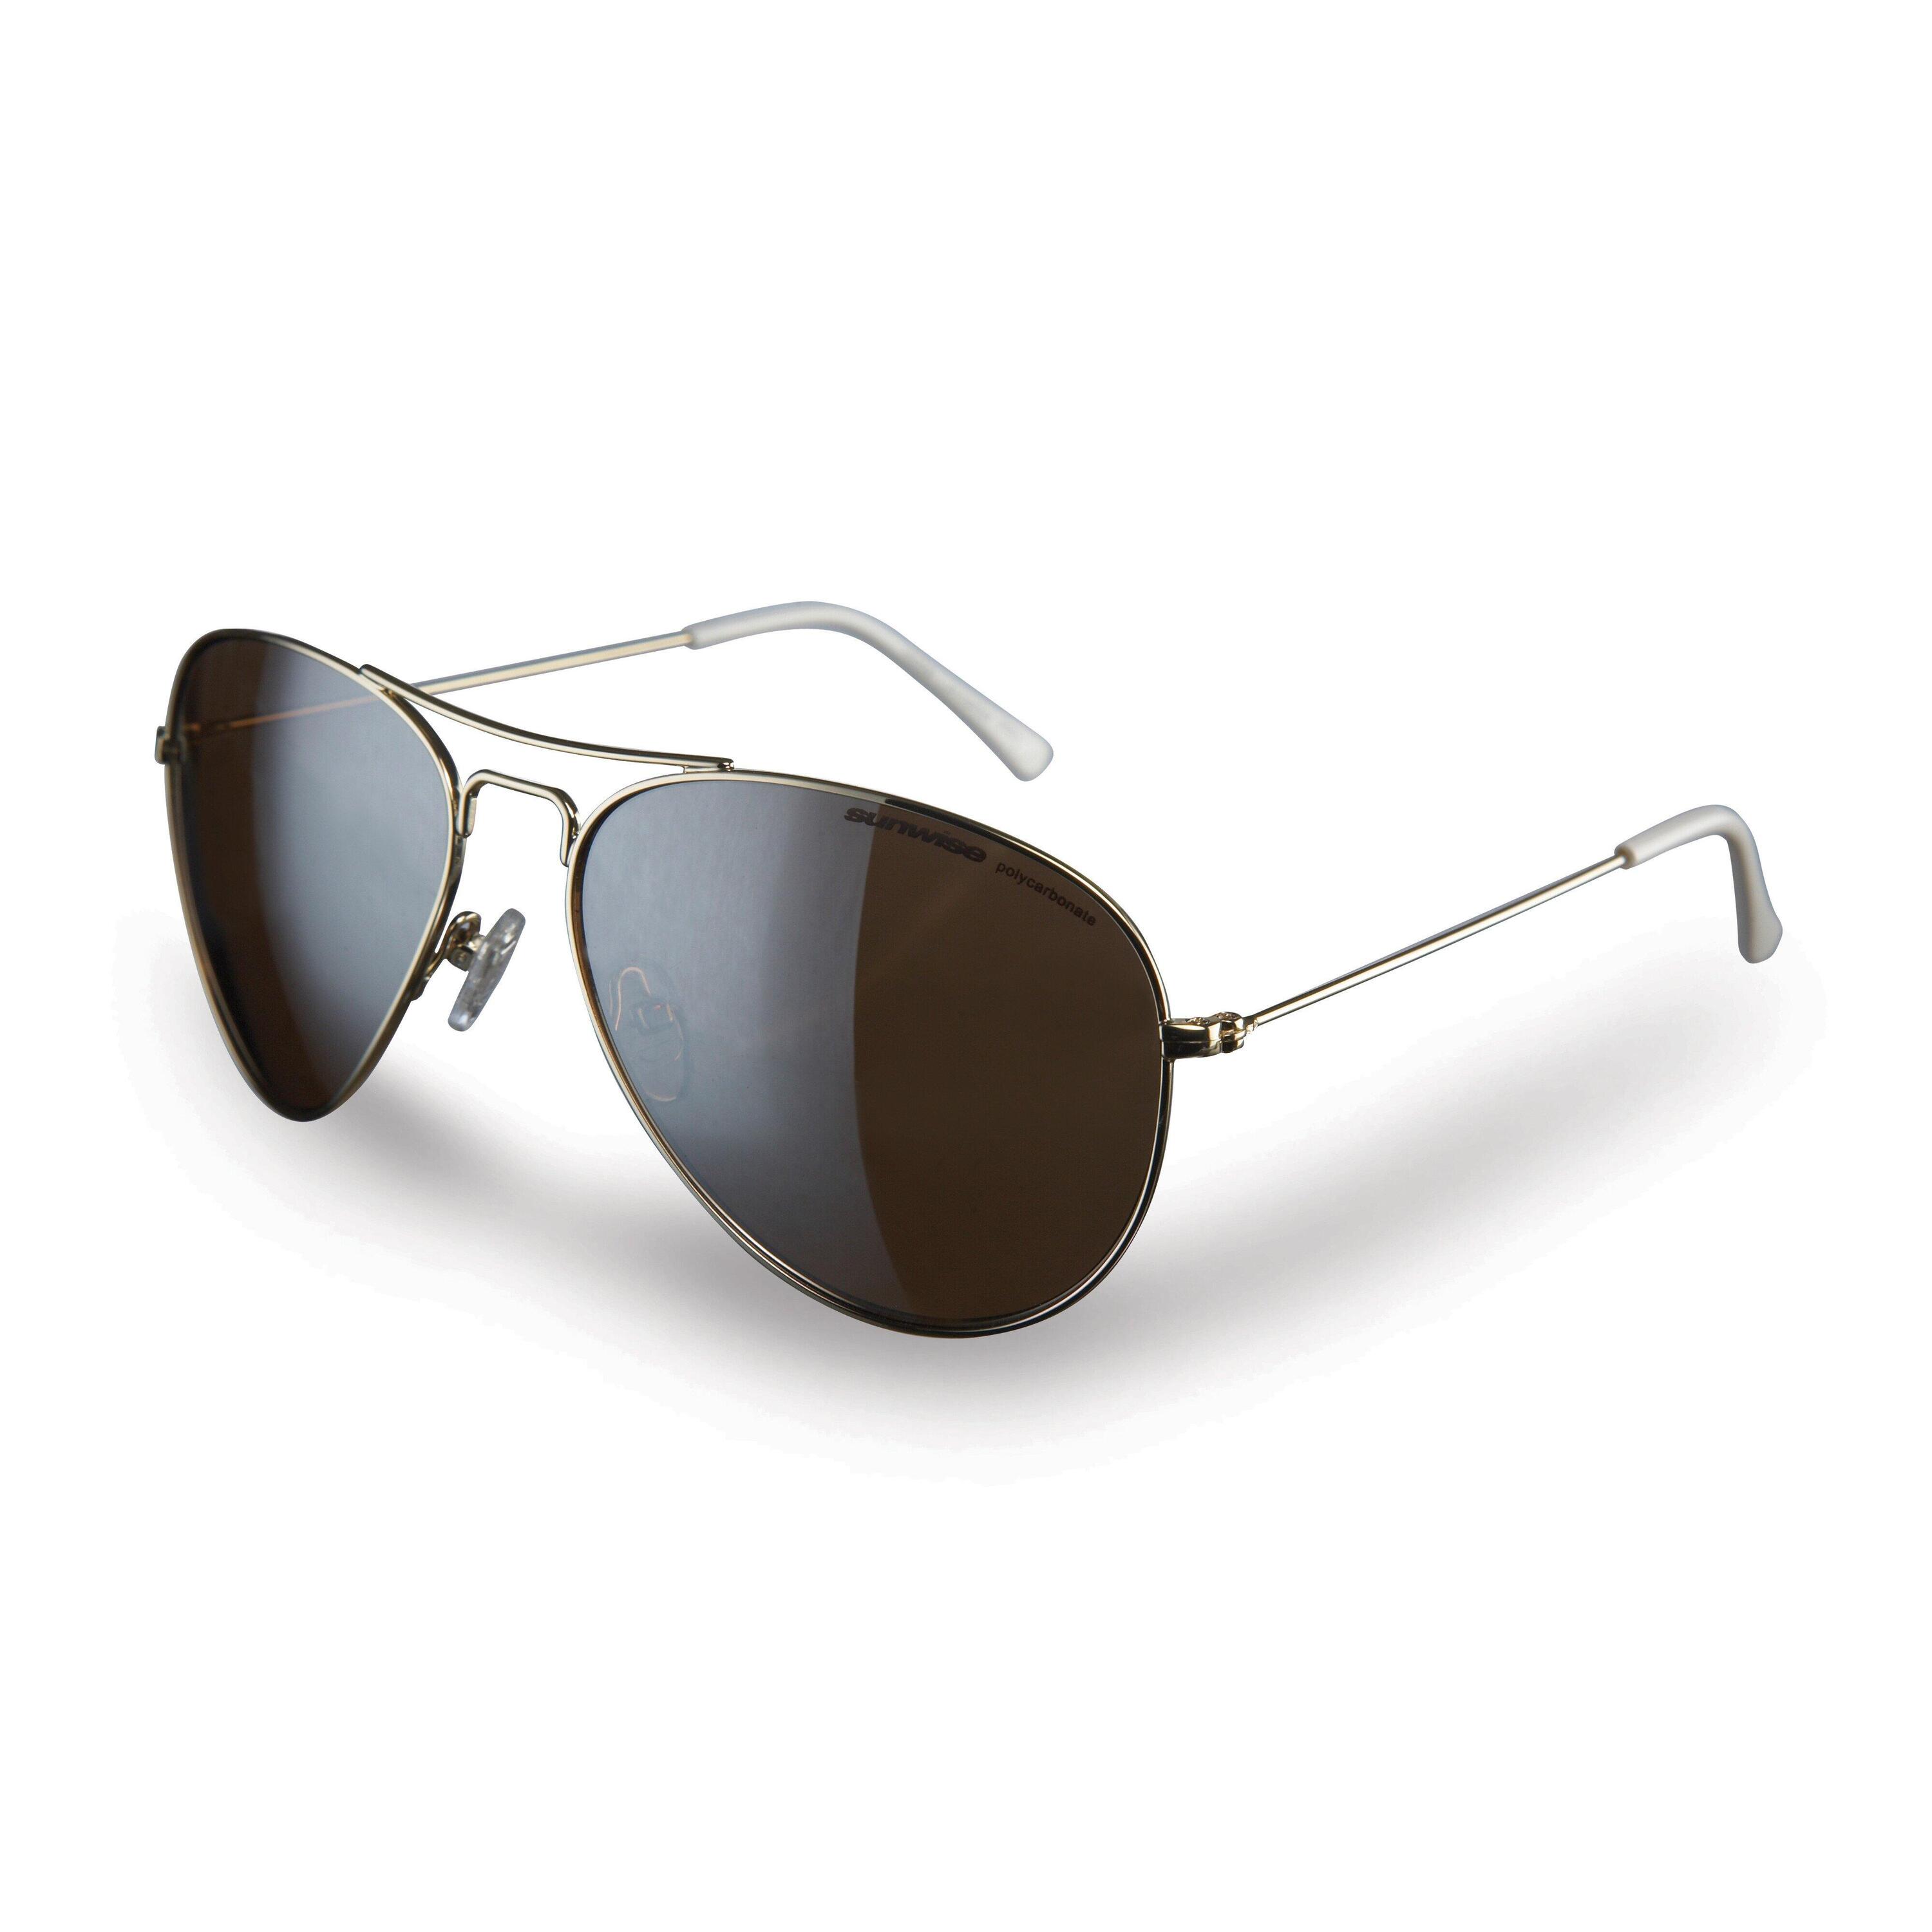 Lancaster PR1 Lifestyle Sunglasses - Category 3 1/3